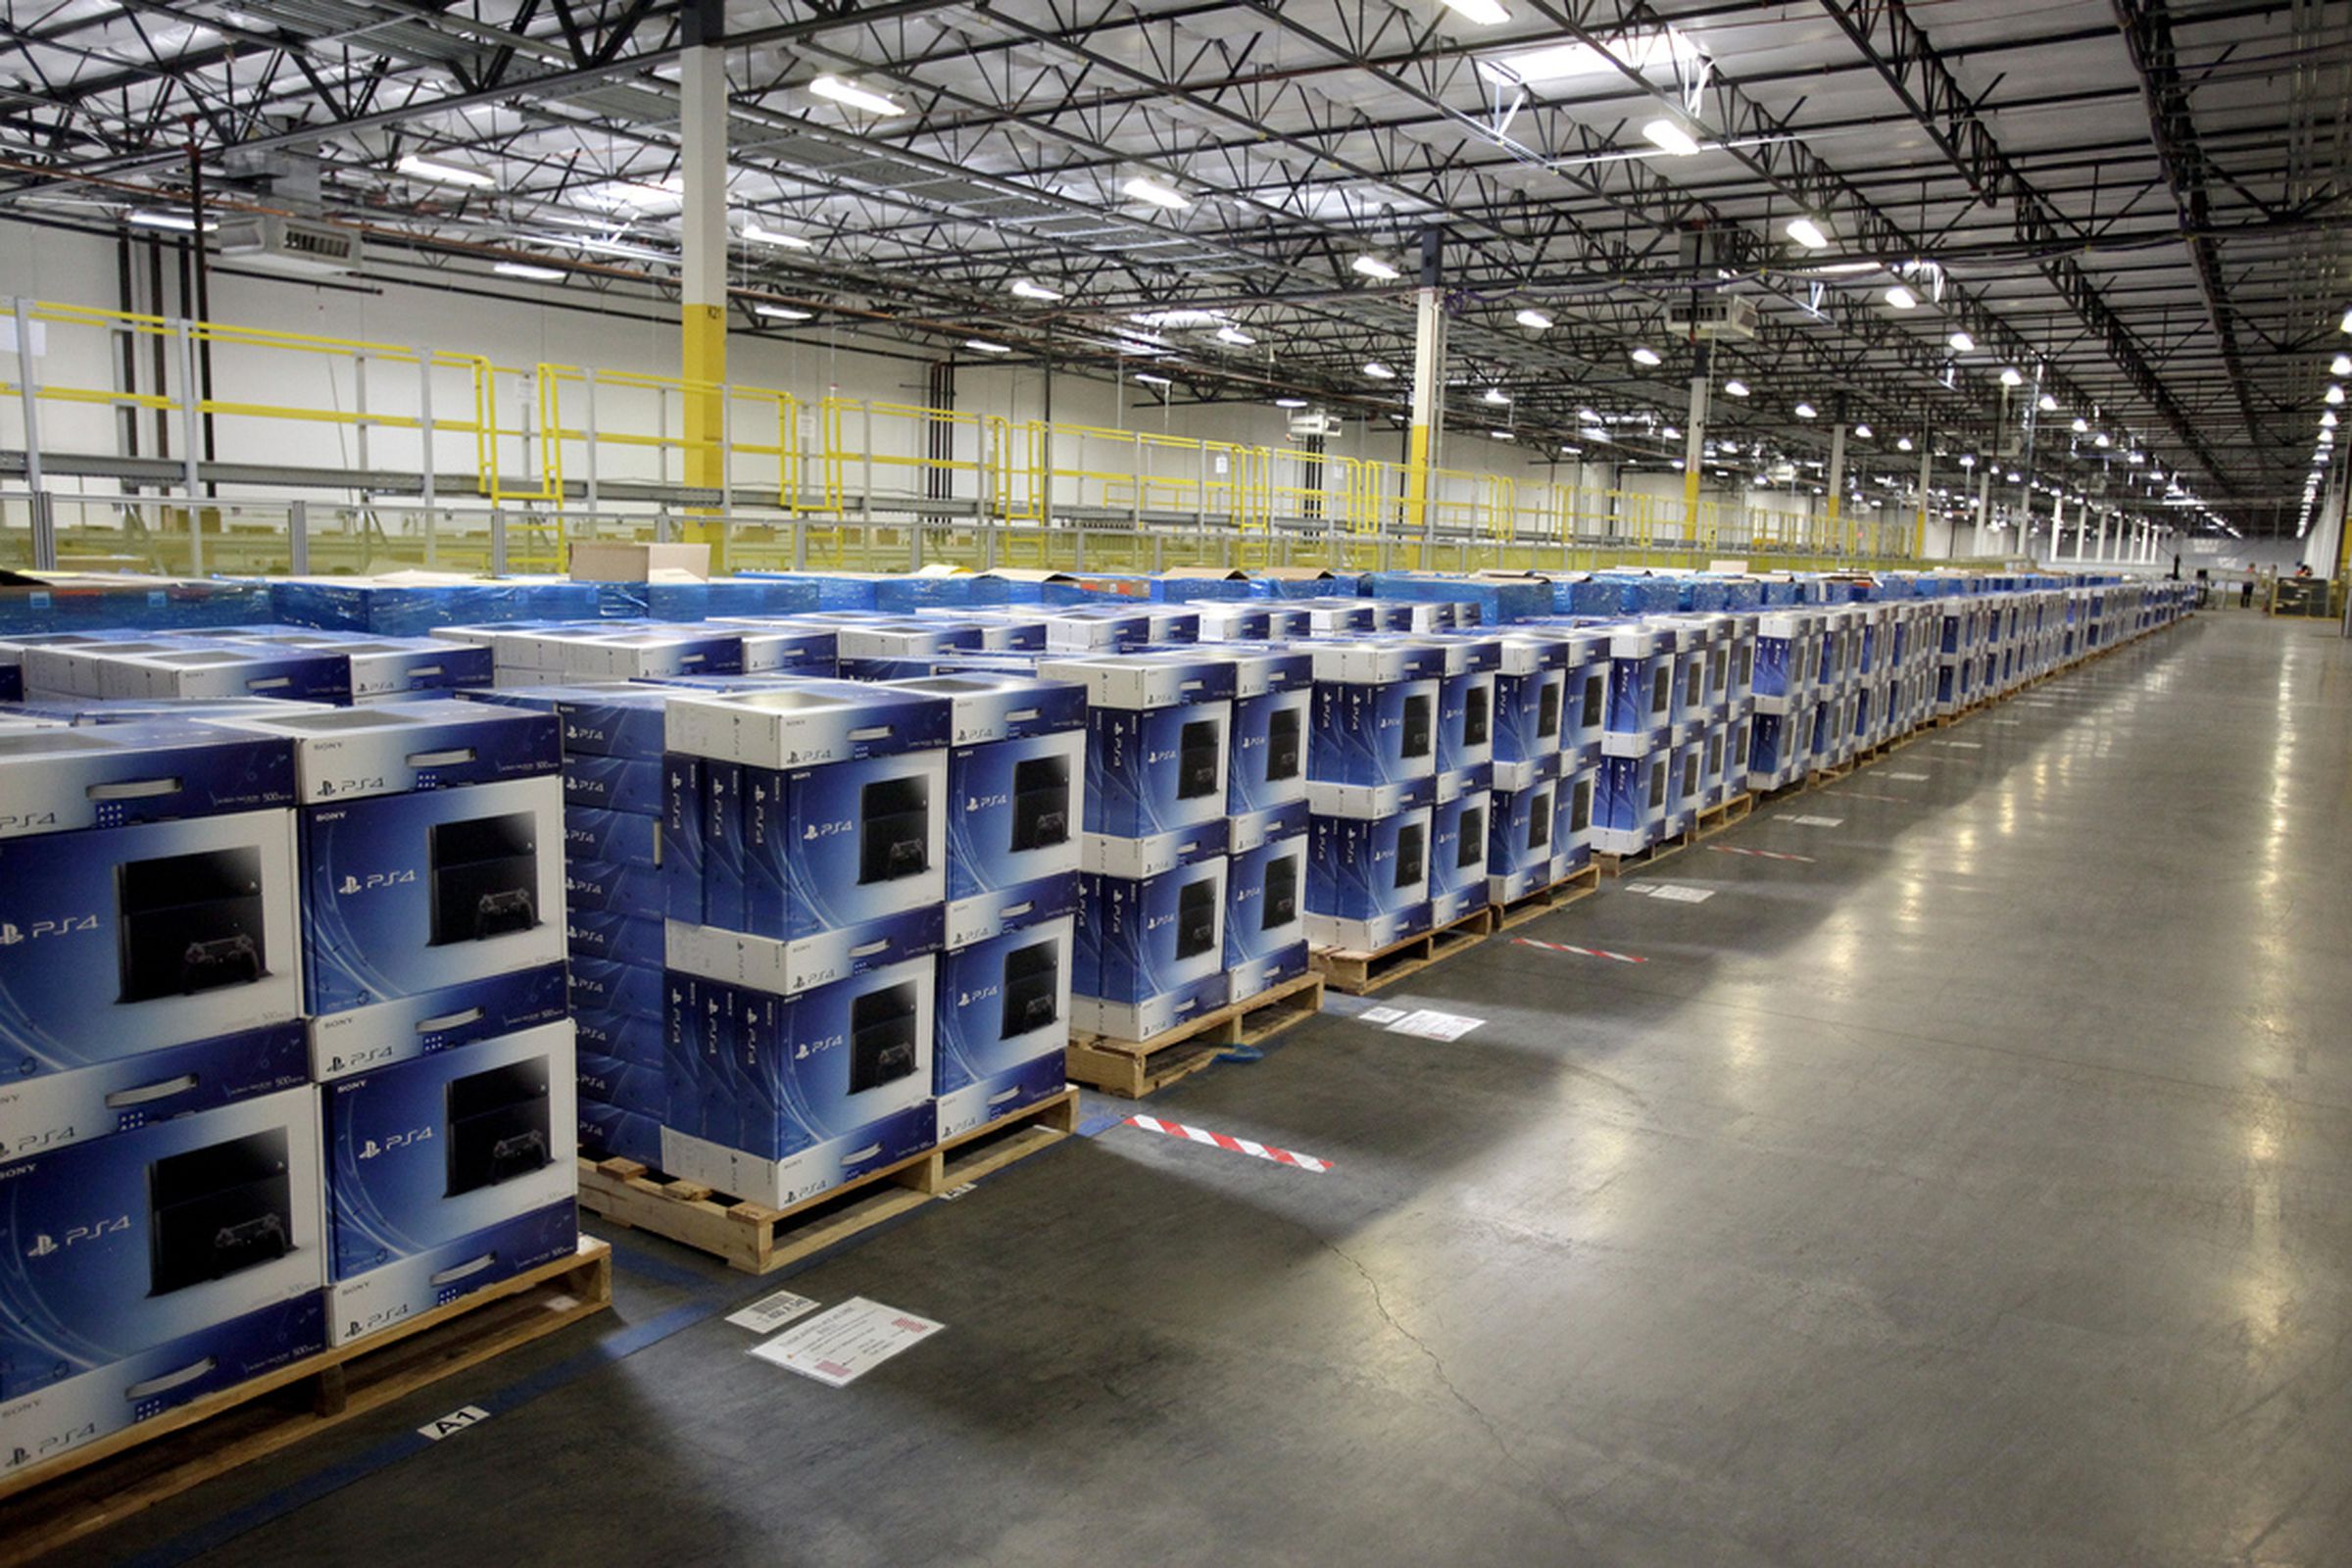 Amazon warehouse PS4s